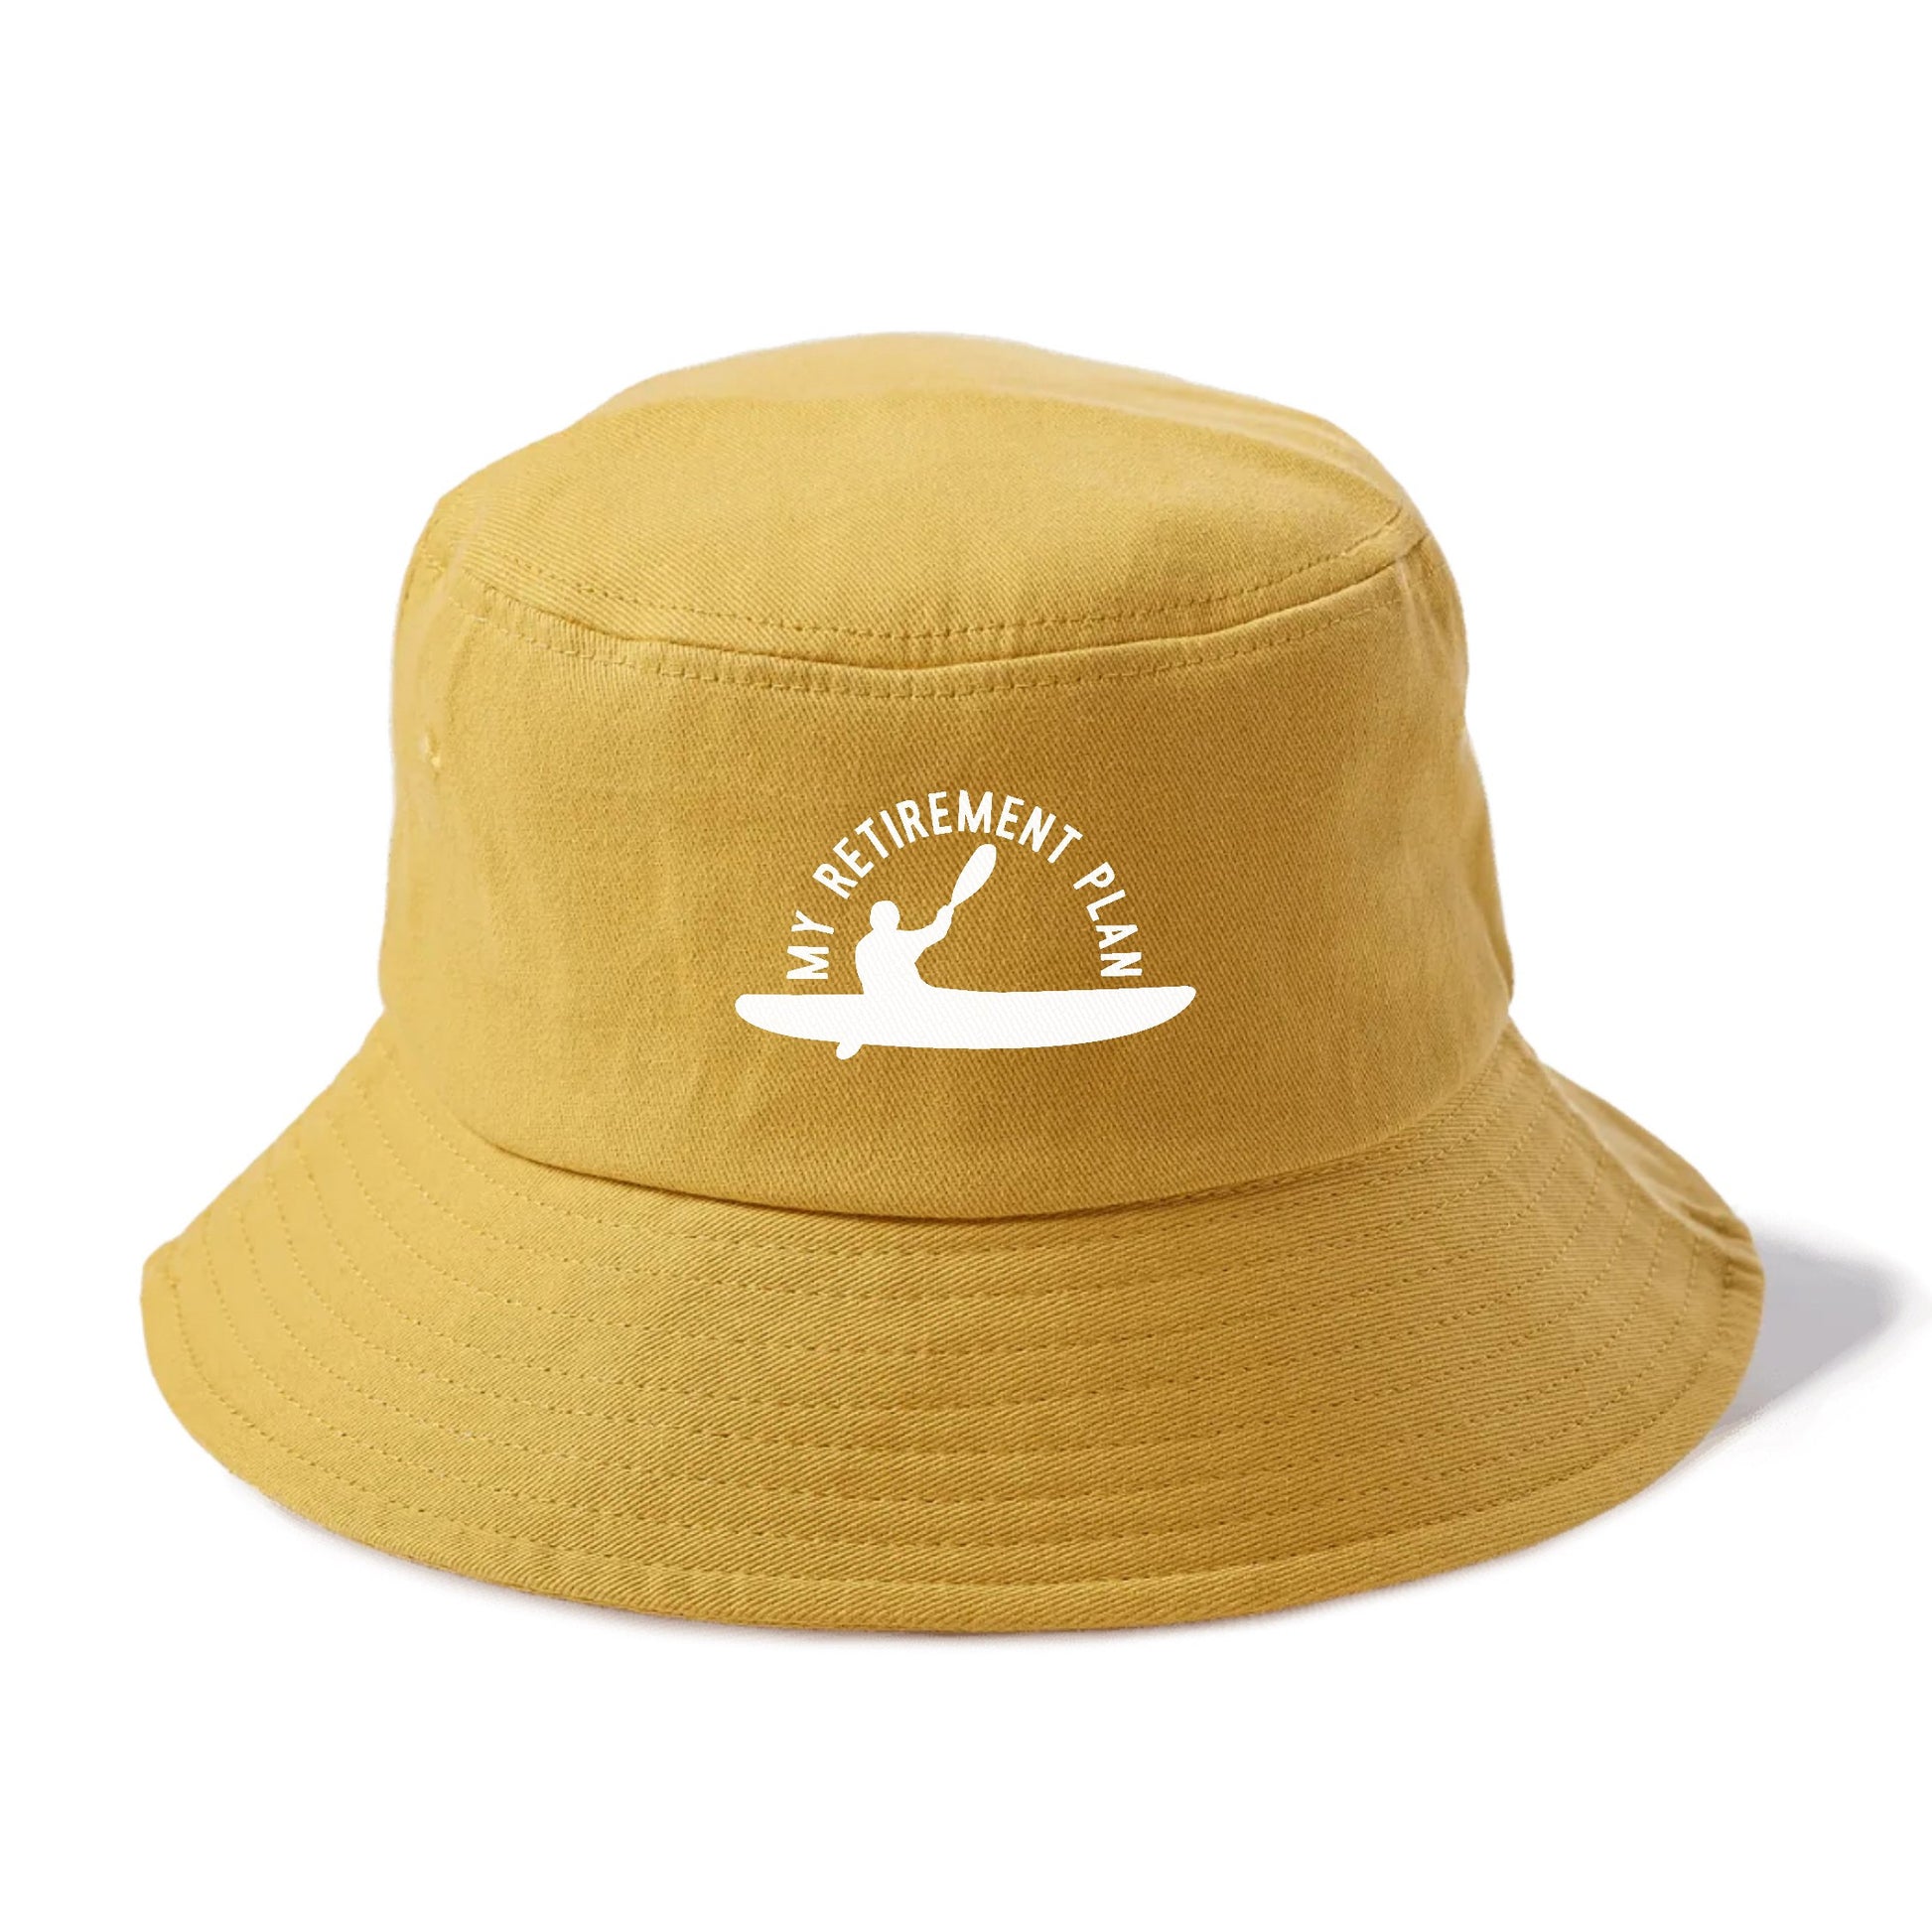 my retirement plan is kayak classic Hat